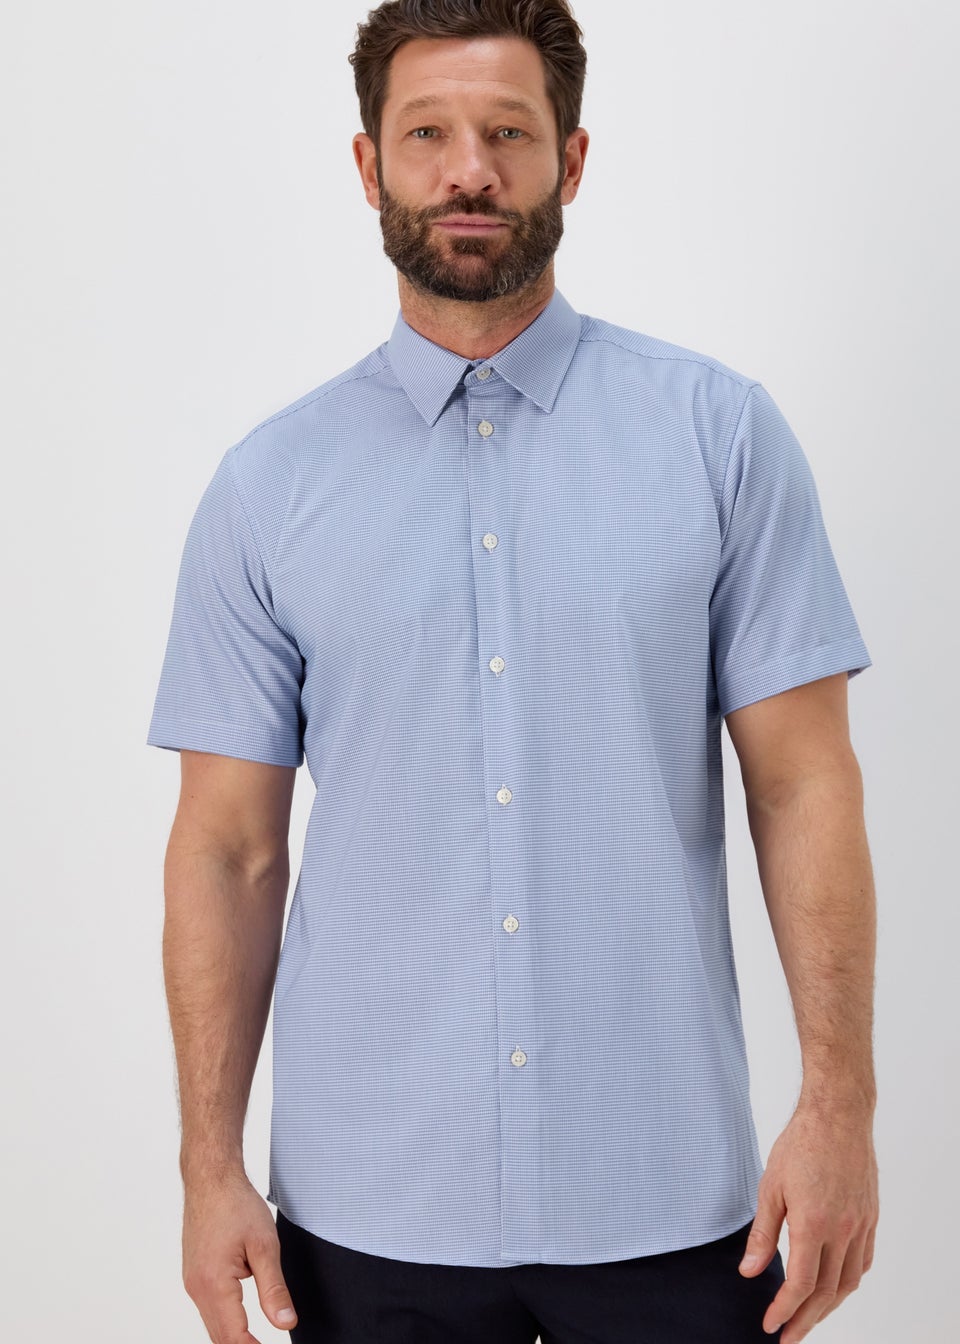 Taylor & Wright Blue Puppytooth Regular Fit Short Sleeve Shirt - Matalan